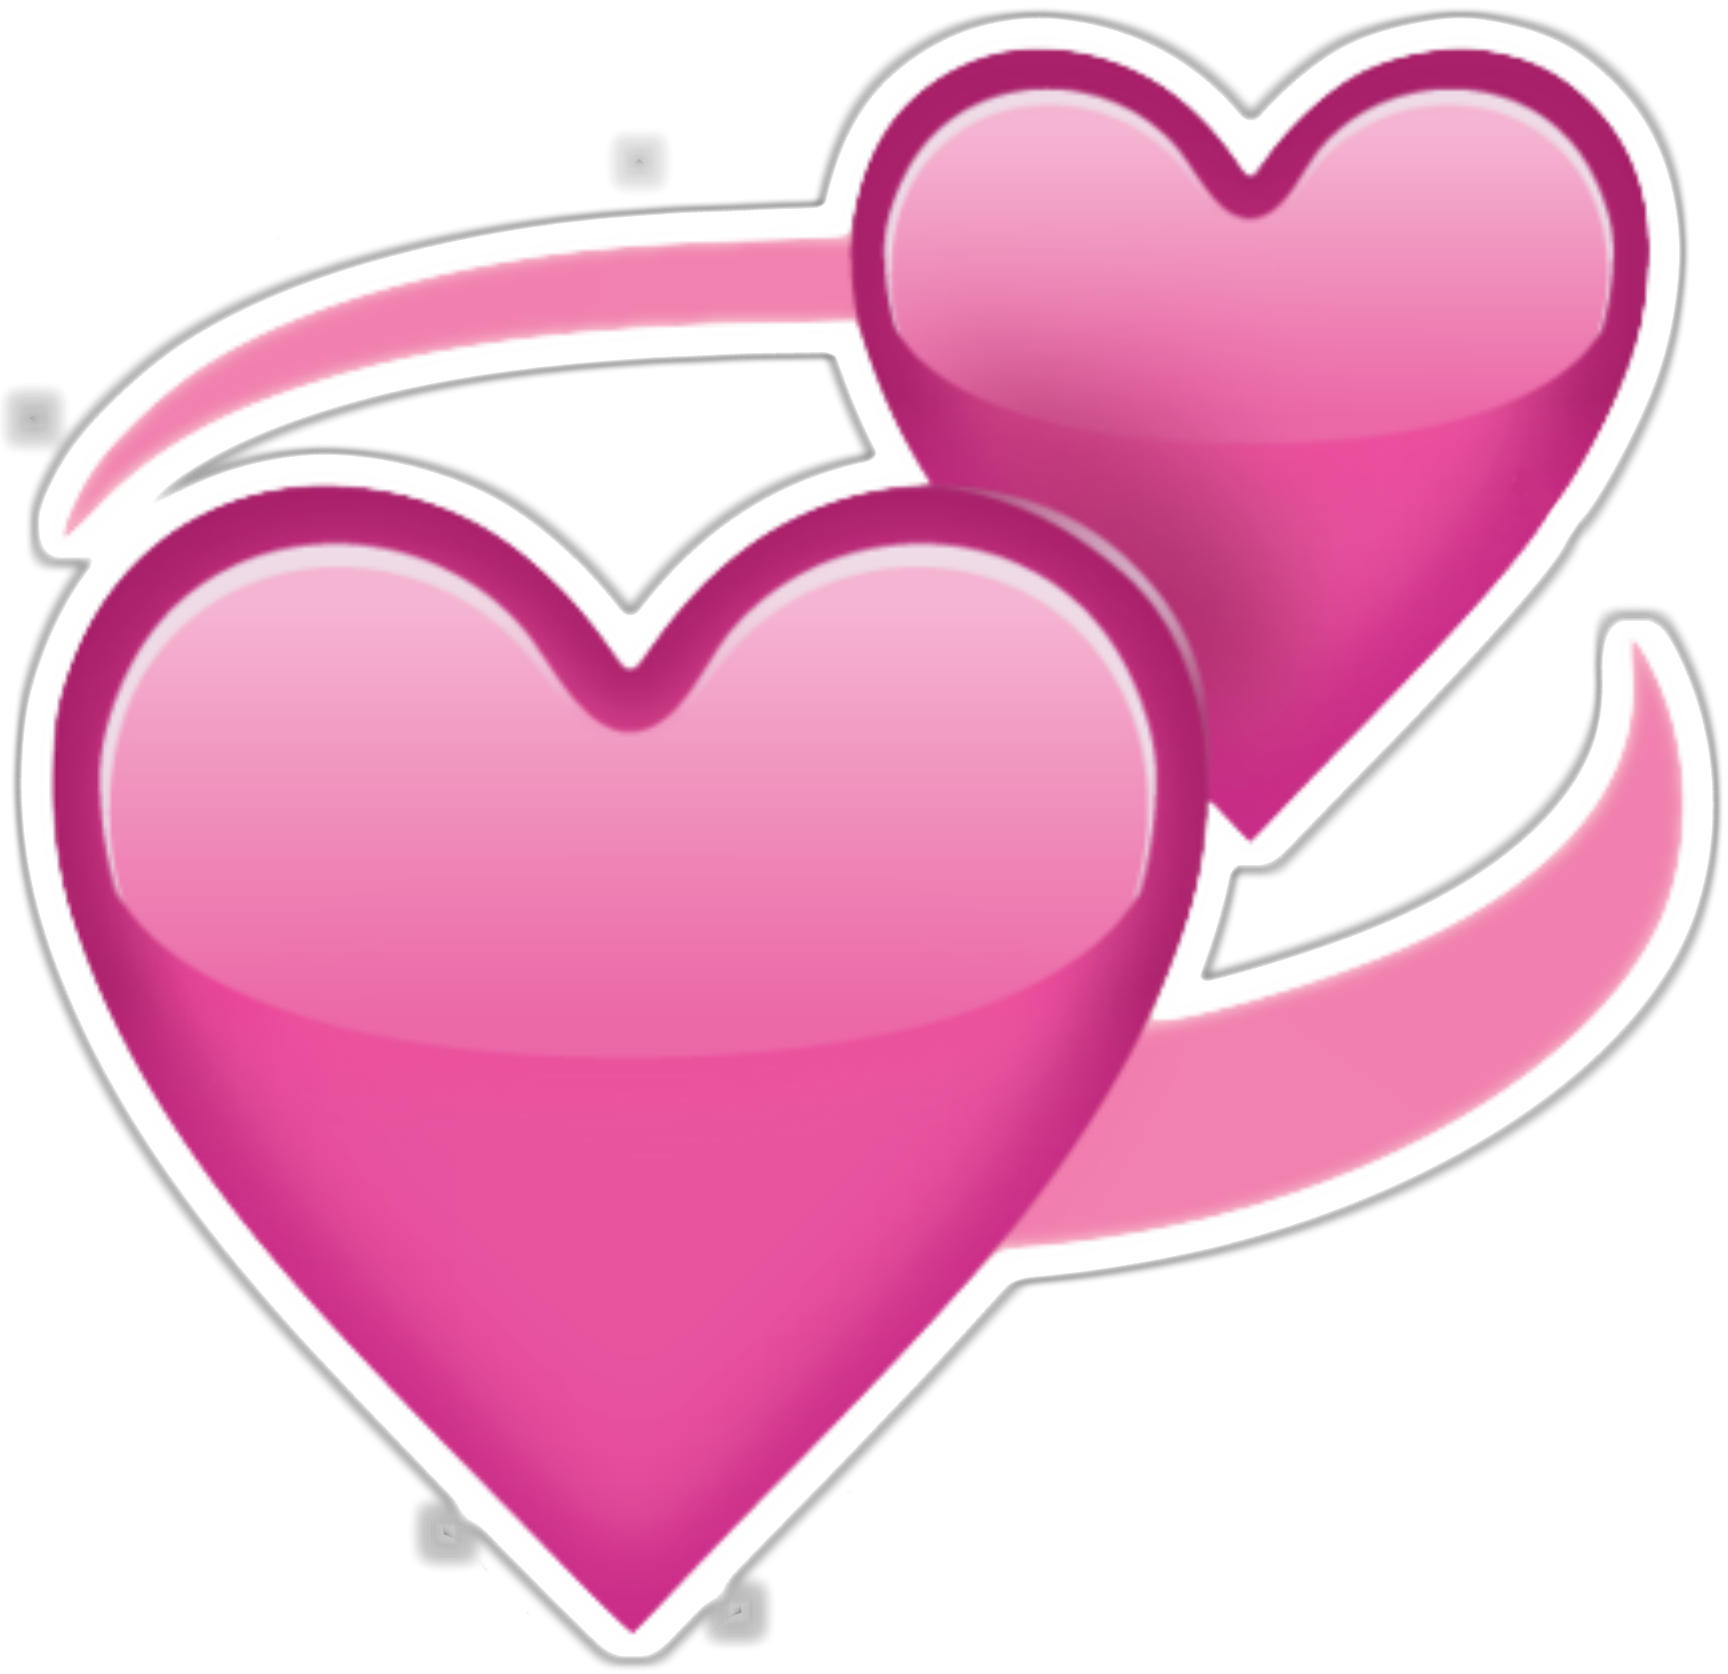 Heart clipart emoji  Pencil and in color heart clipart emoji